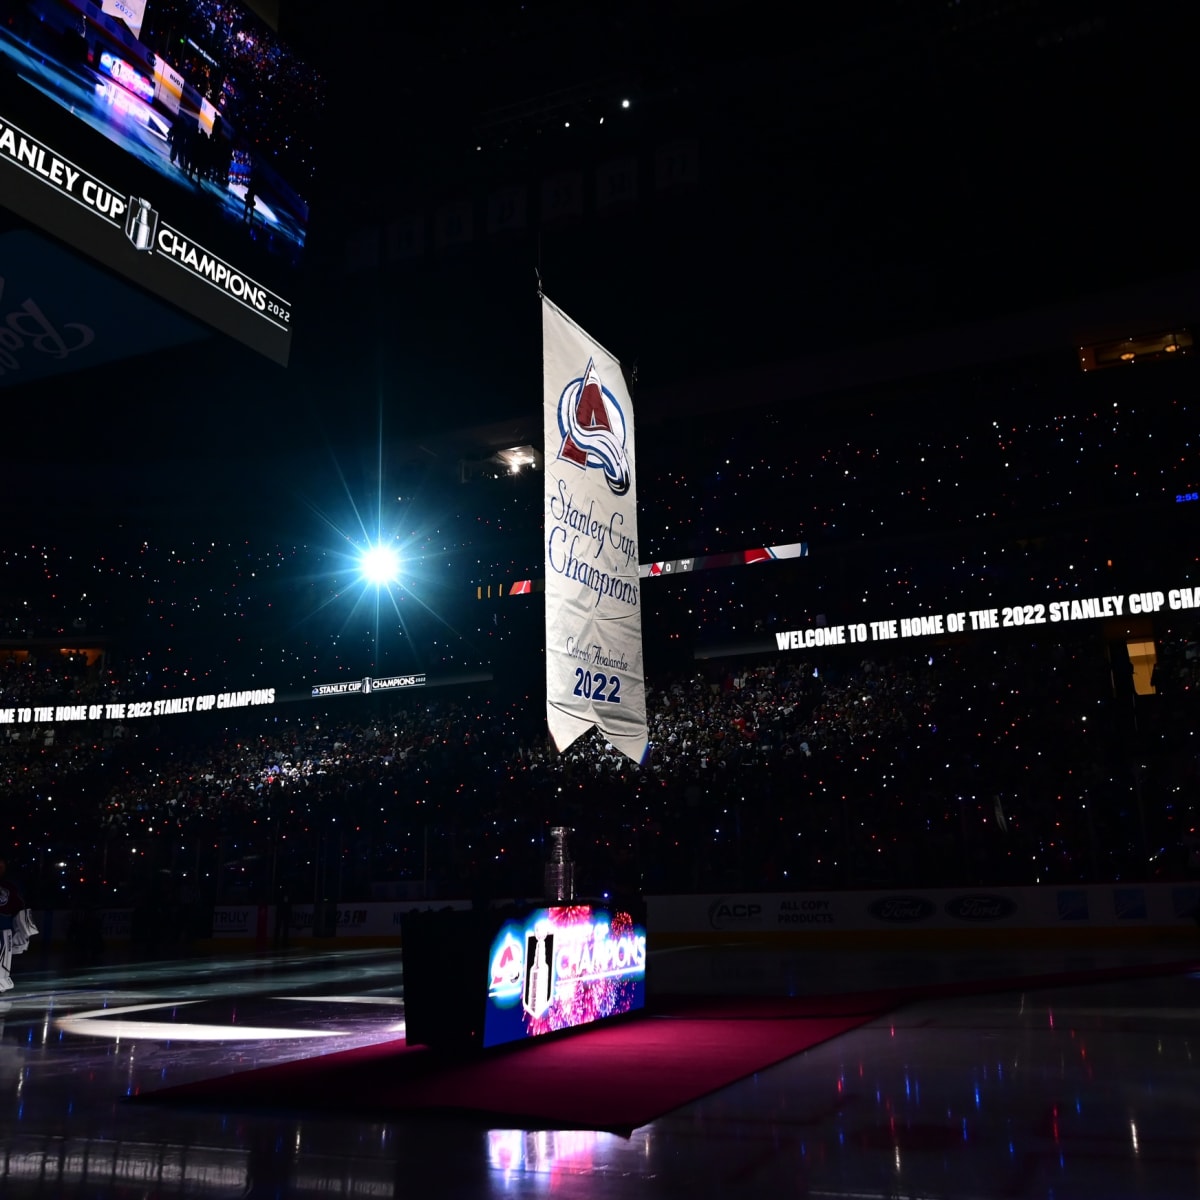 Golden Knights deliver Vegas show in raising Stanley Cup banner - ESPN